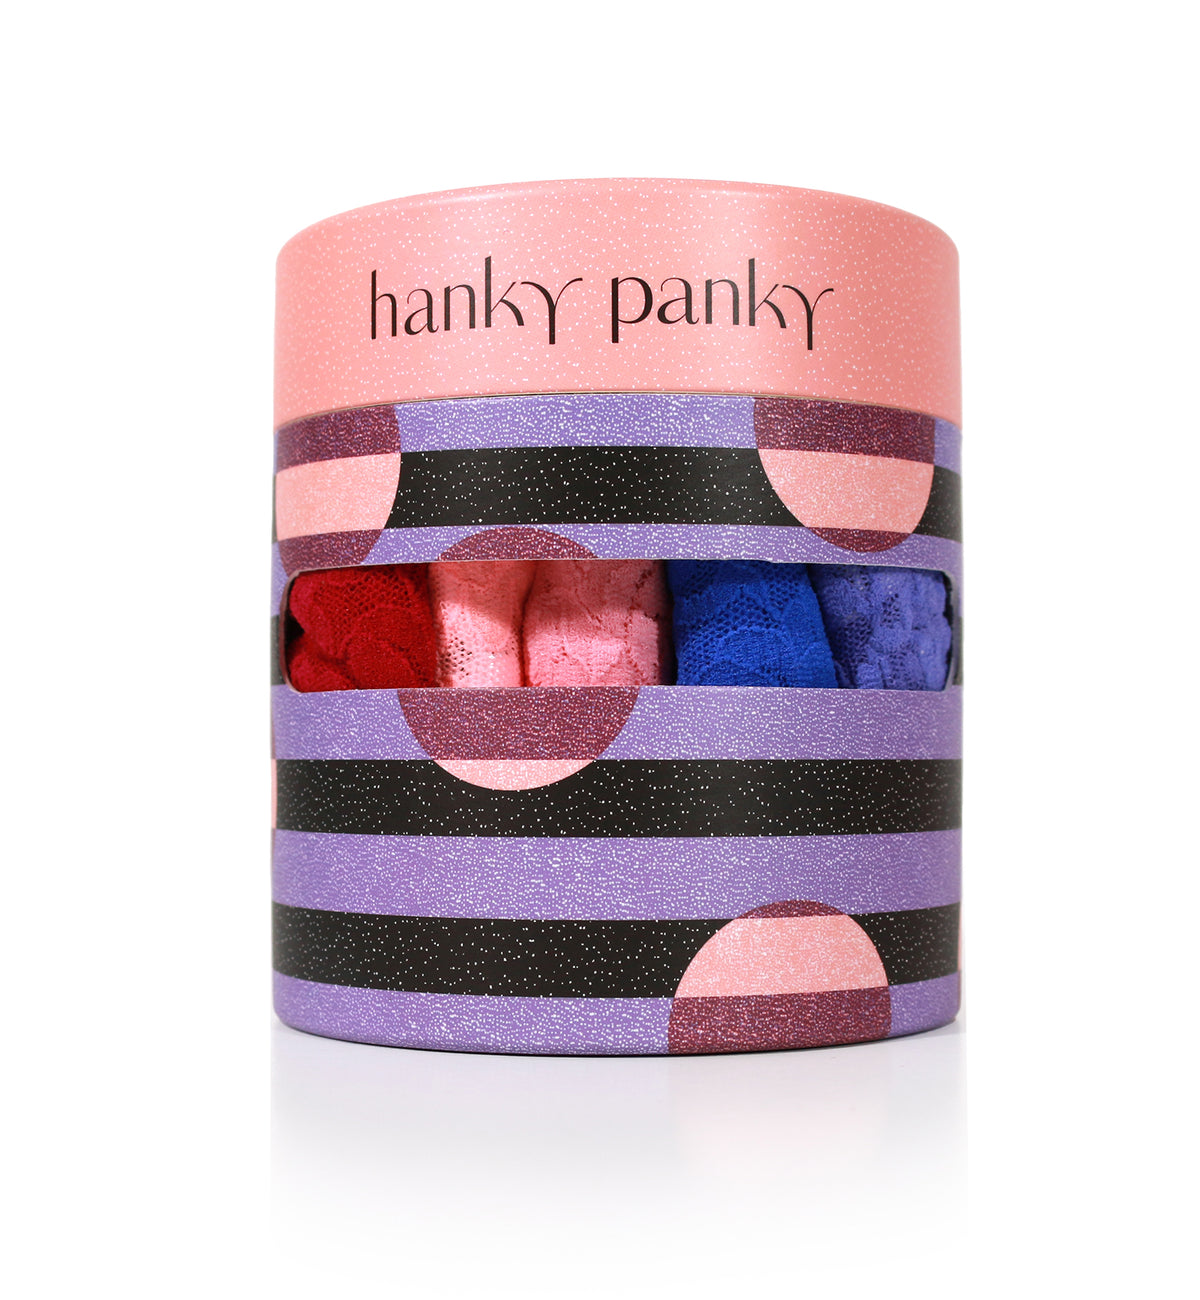 Hanky Panky 5-PACK Signature Lace Original Rise Thong (48115PK),Holiday23 FOLF - FOLF,One Size